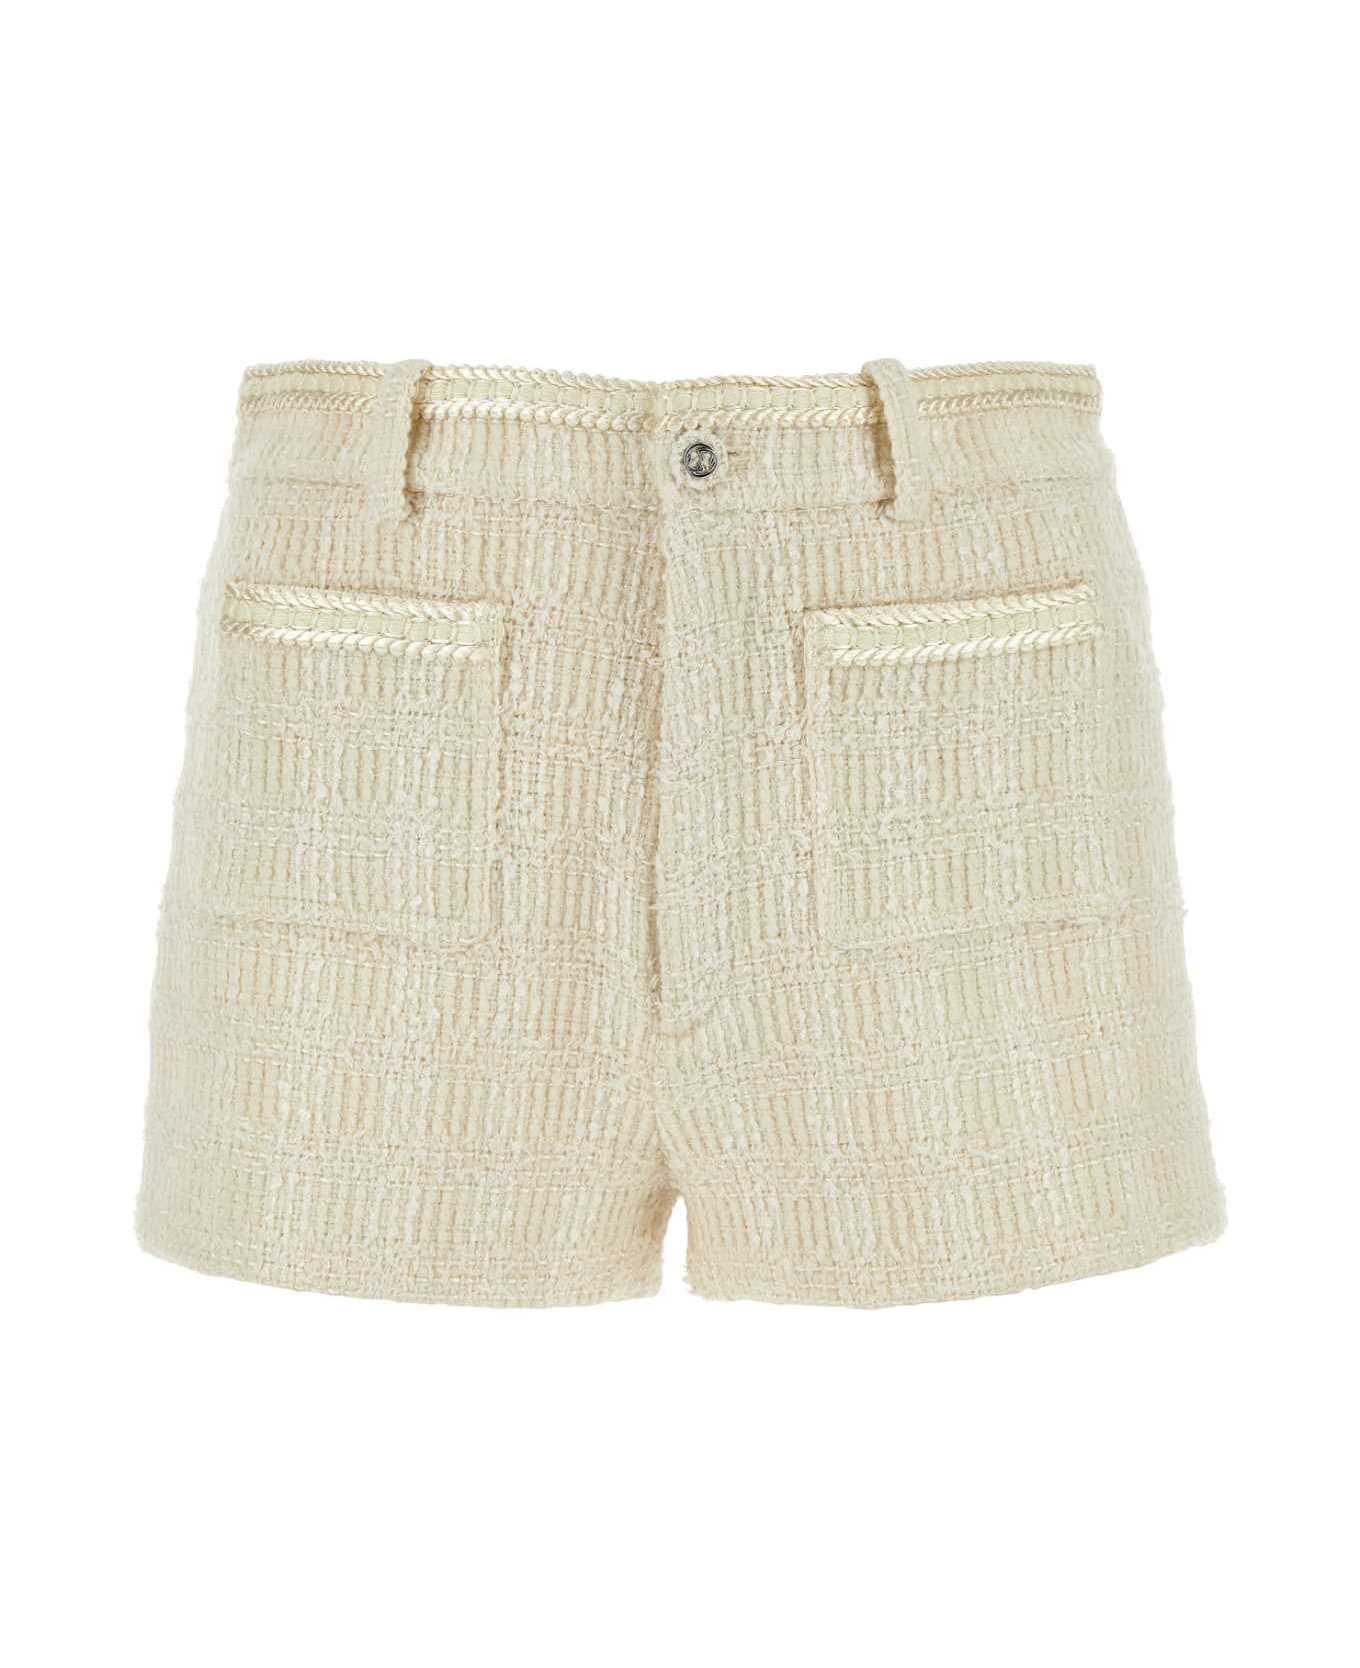 Gucci Ivory Tweed Shorts - IVORY